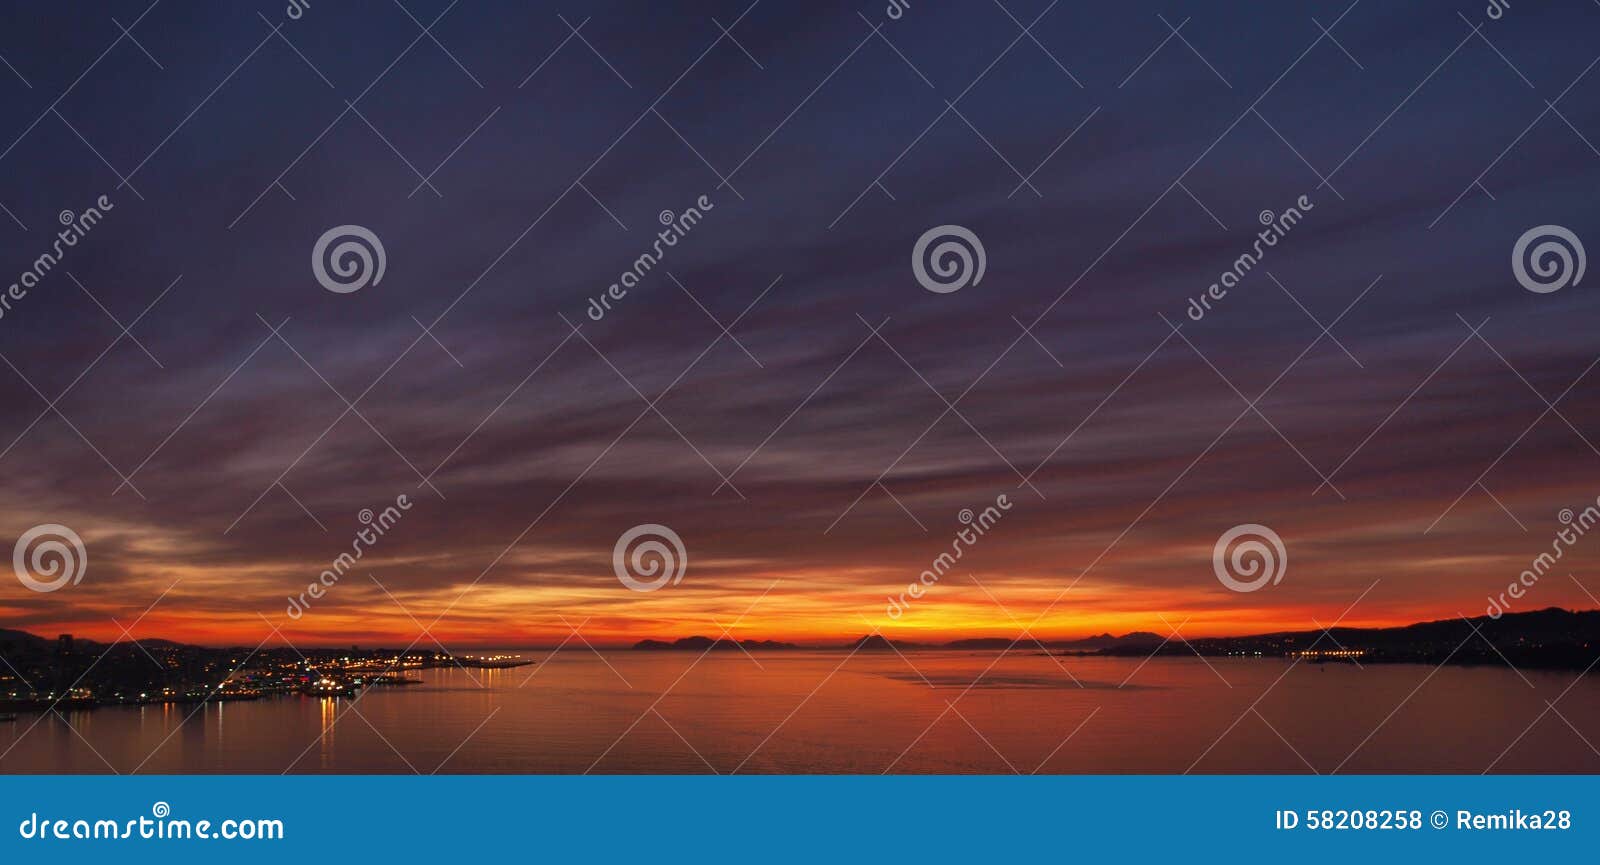 sunset in the estuary of vigo, spain